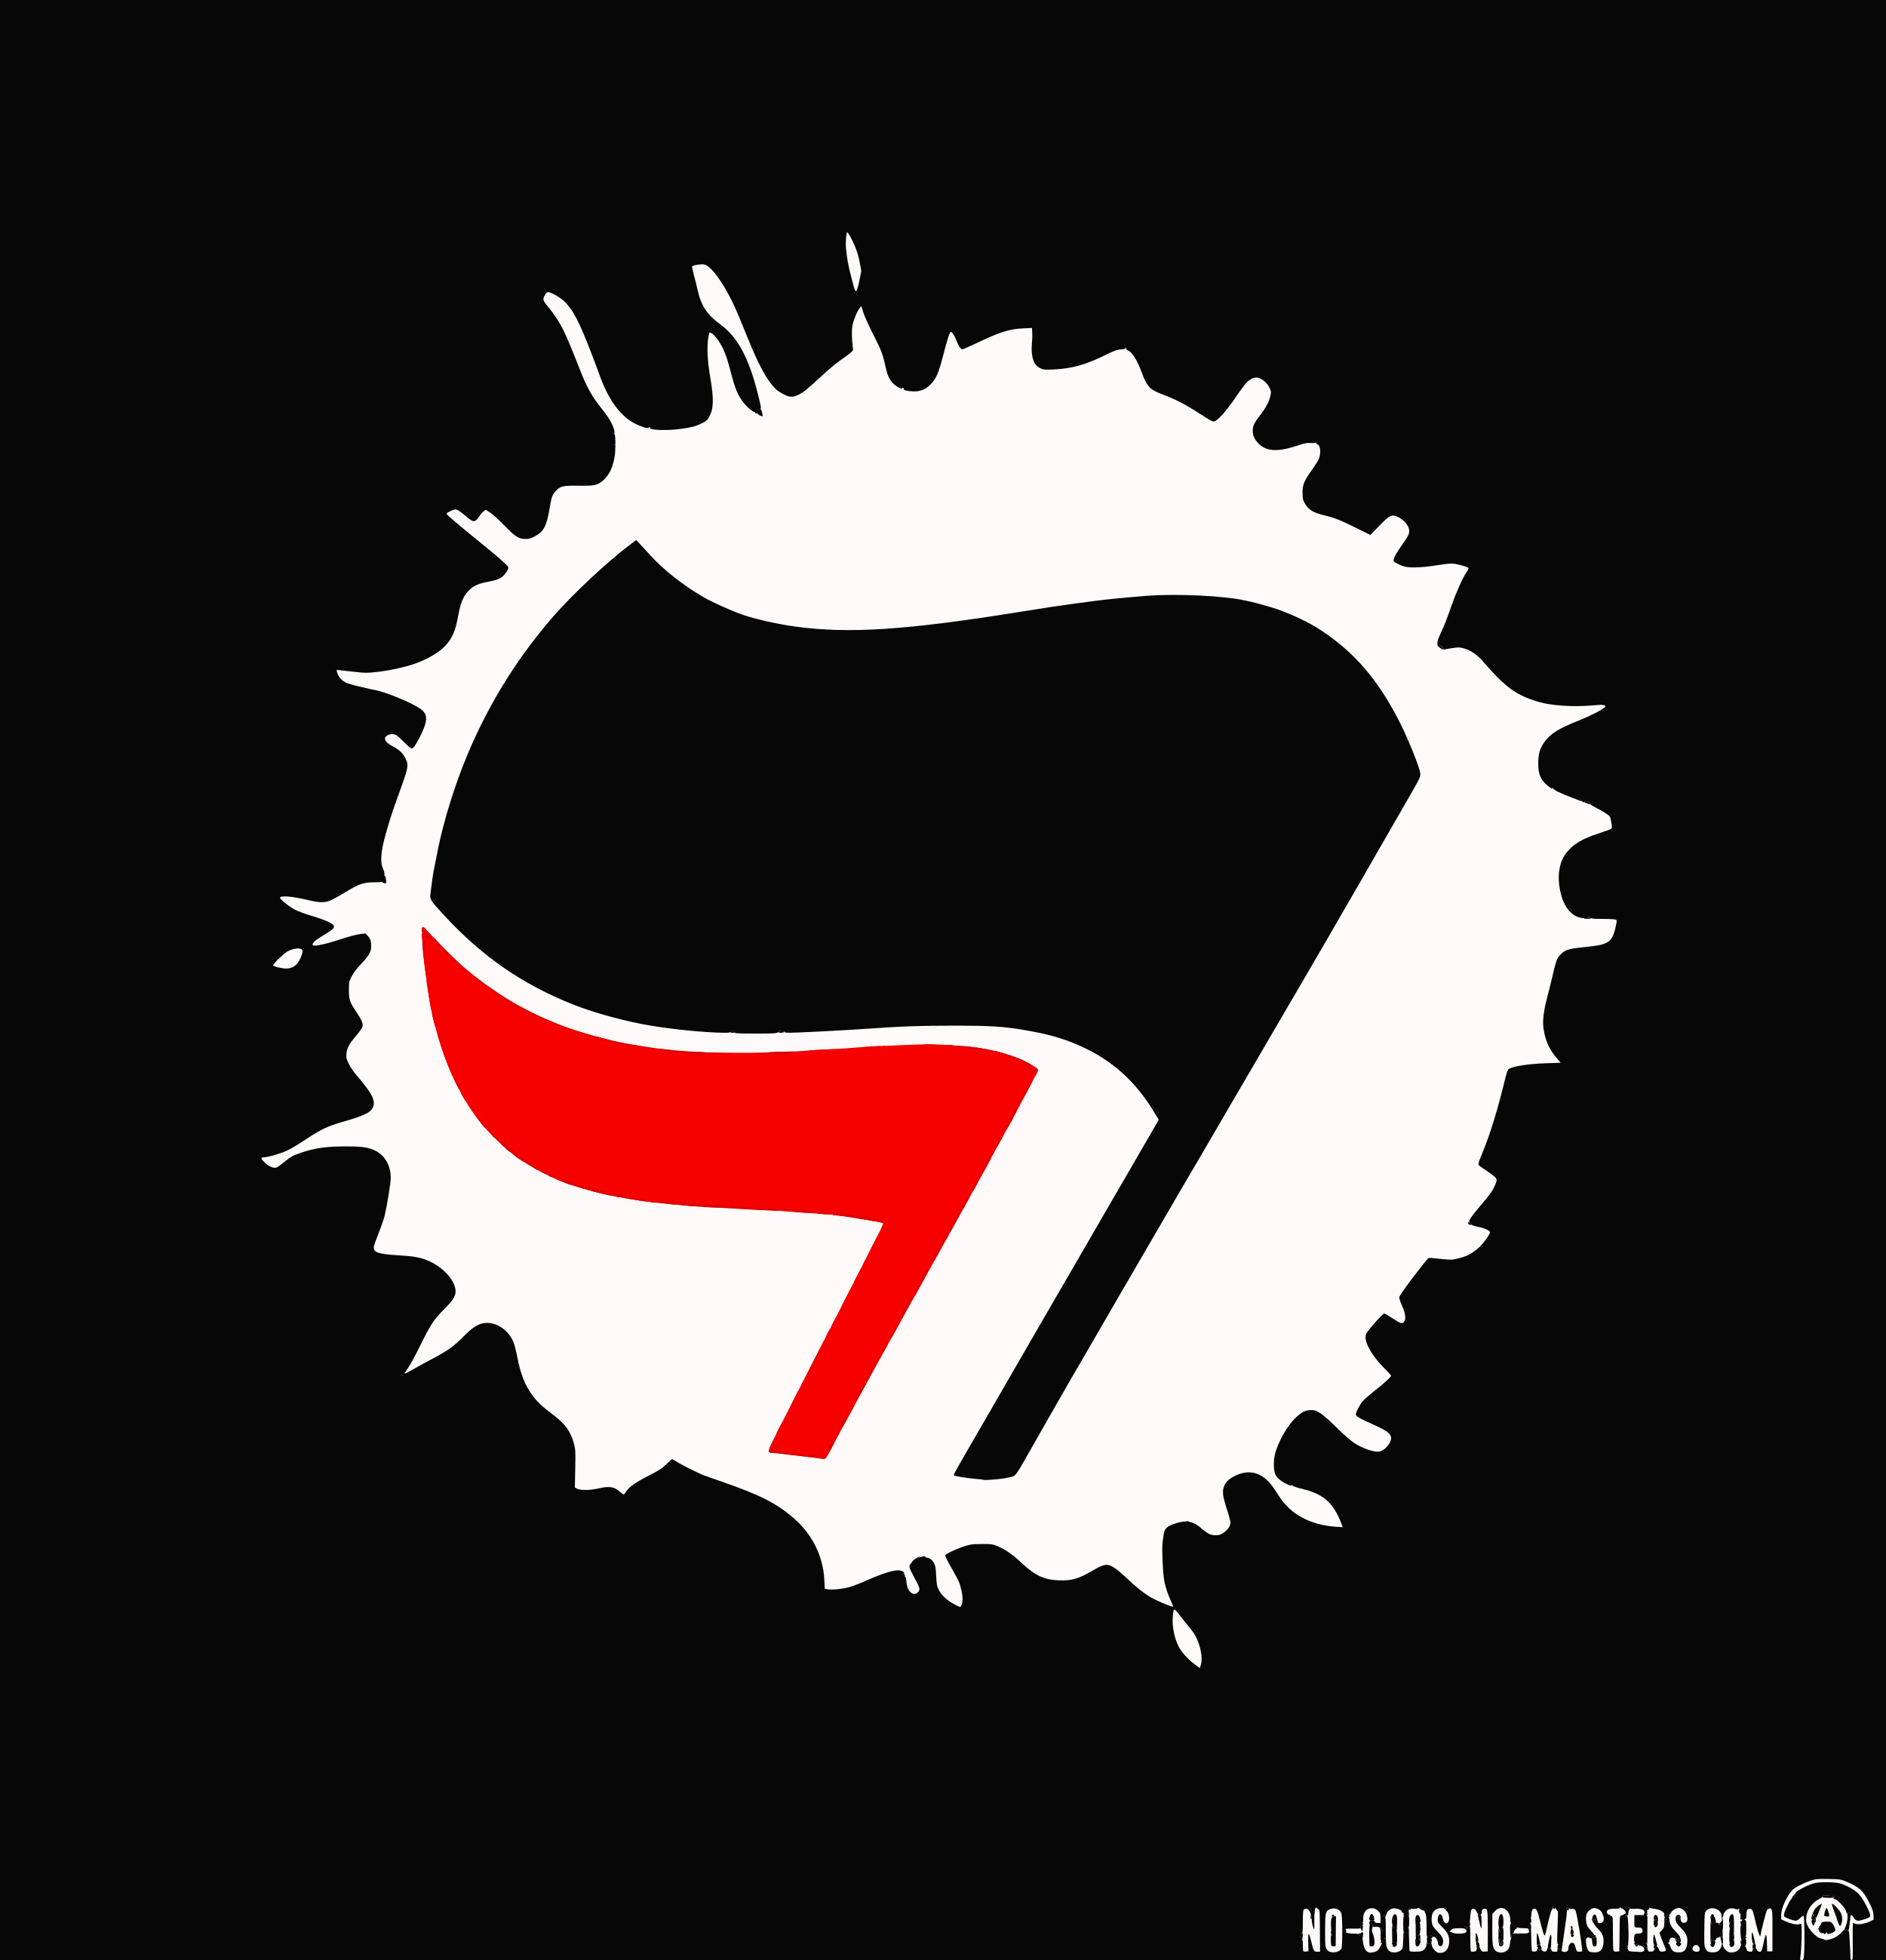 Splashy antifascism